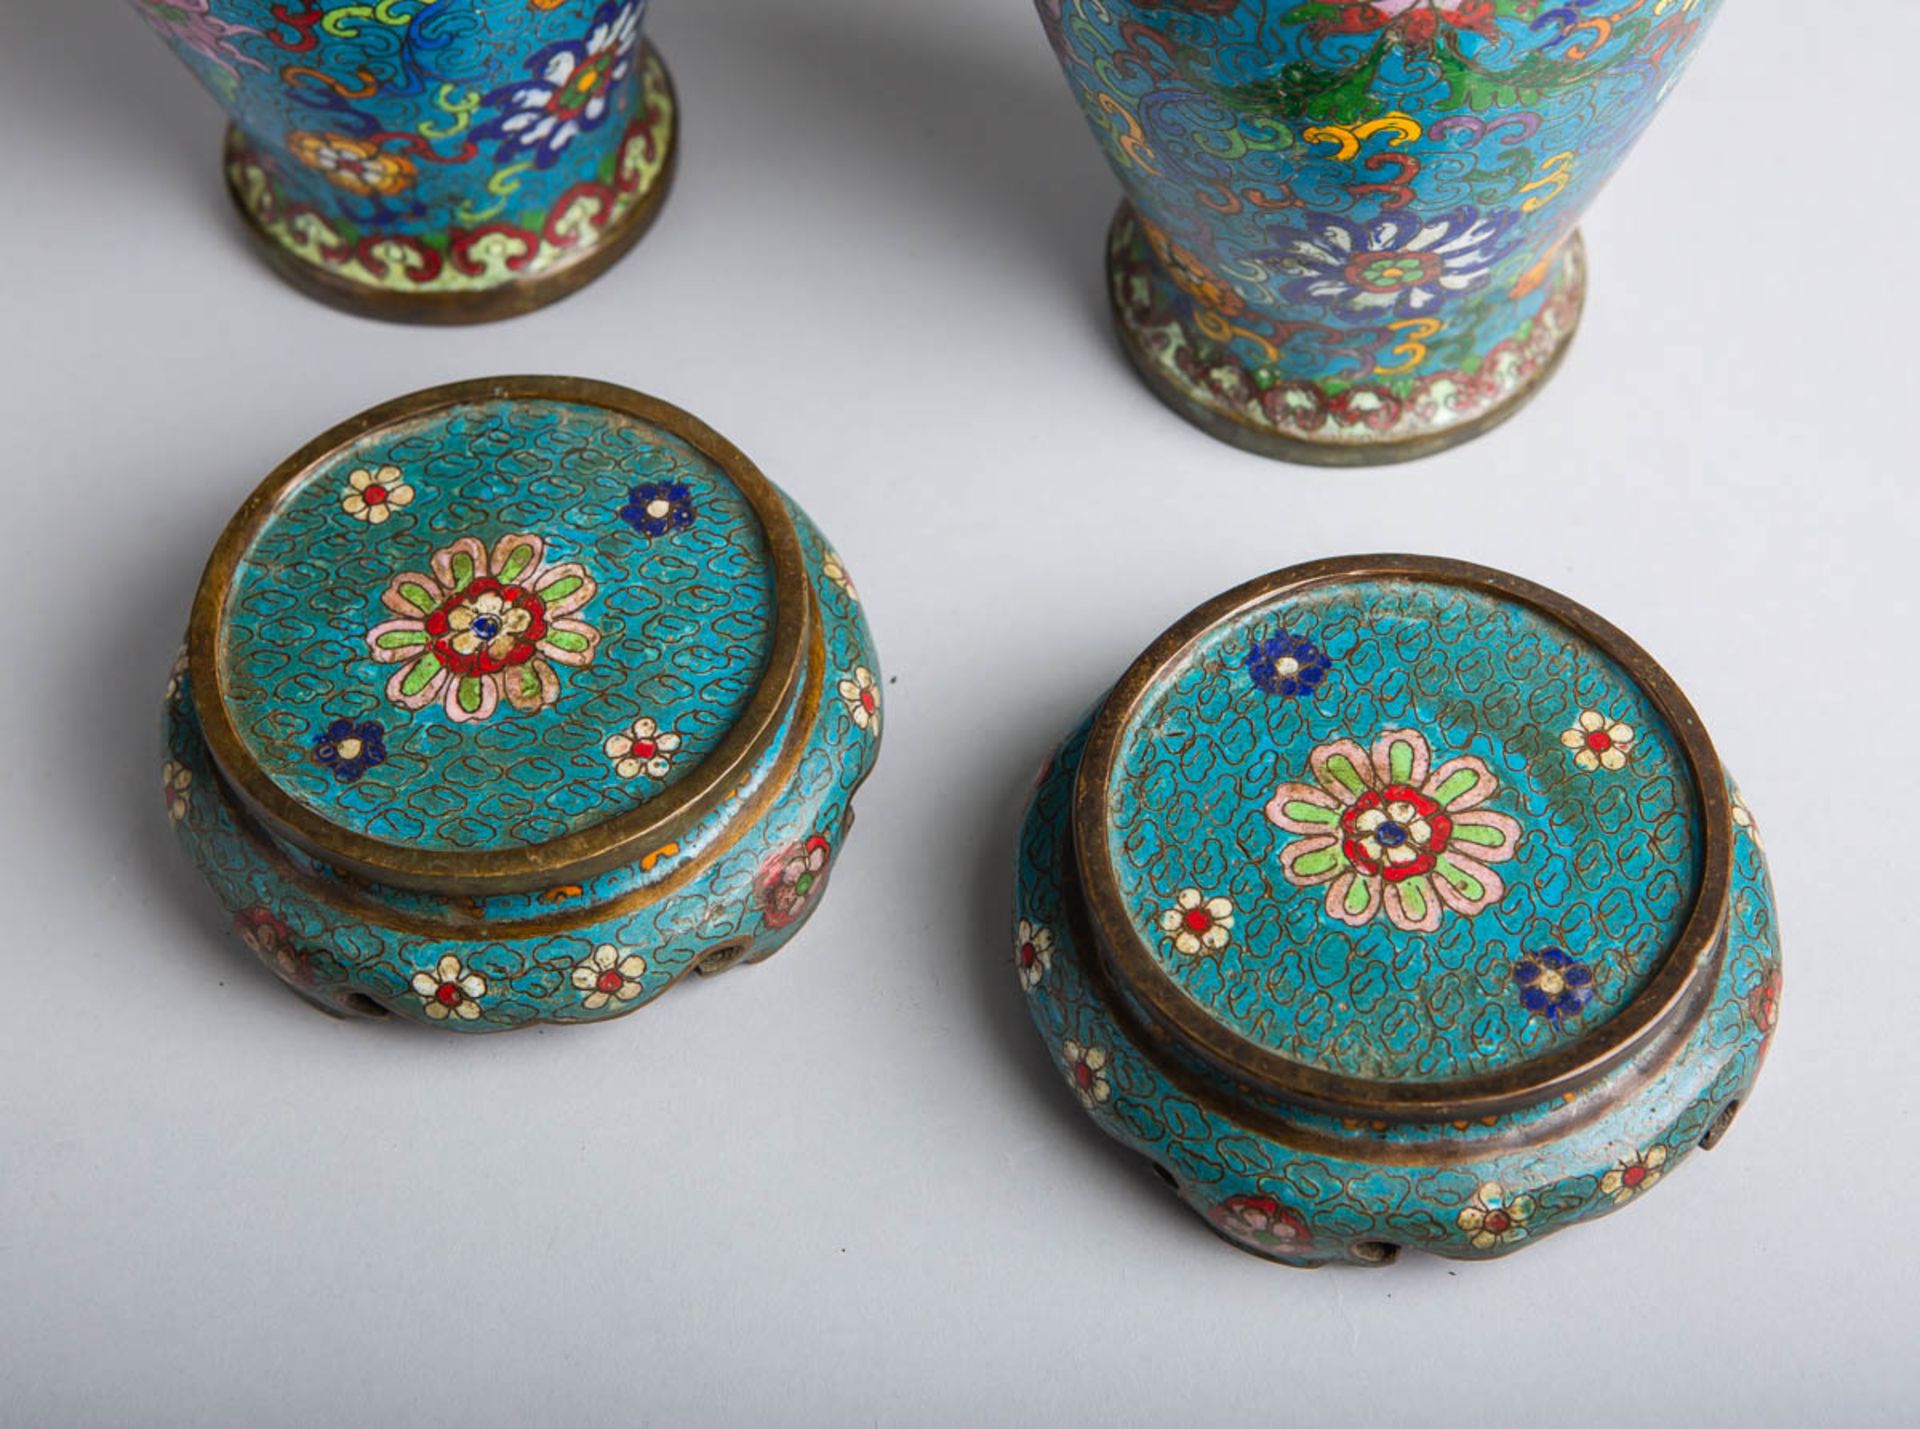 2-teiliges Set von Cloisonné-Vasen m. passenden Sockeln (China, Qing-Dynastie, wohl 16./17. Jh.) - Image 3 of 4